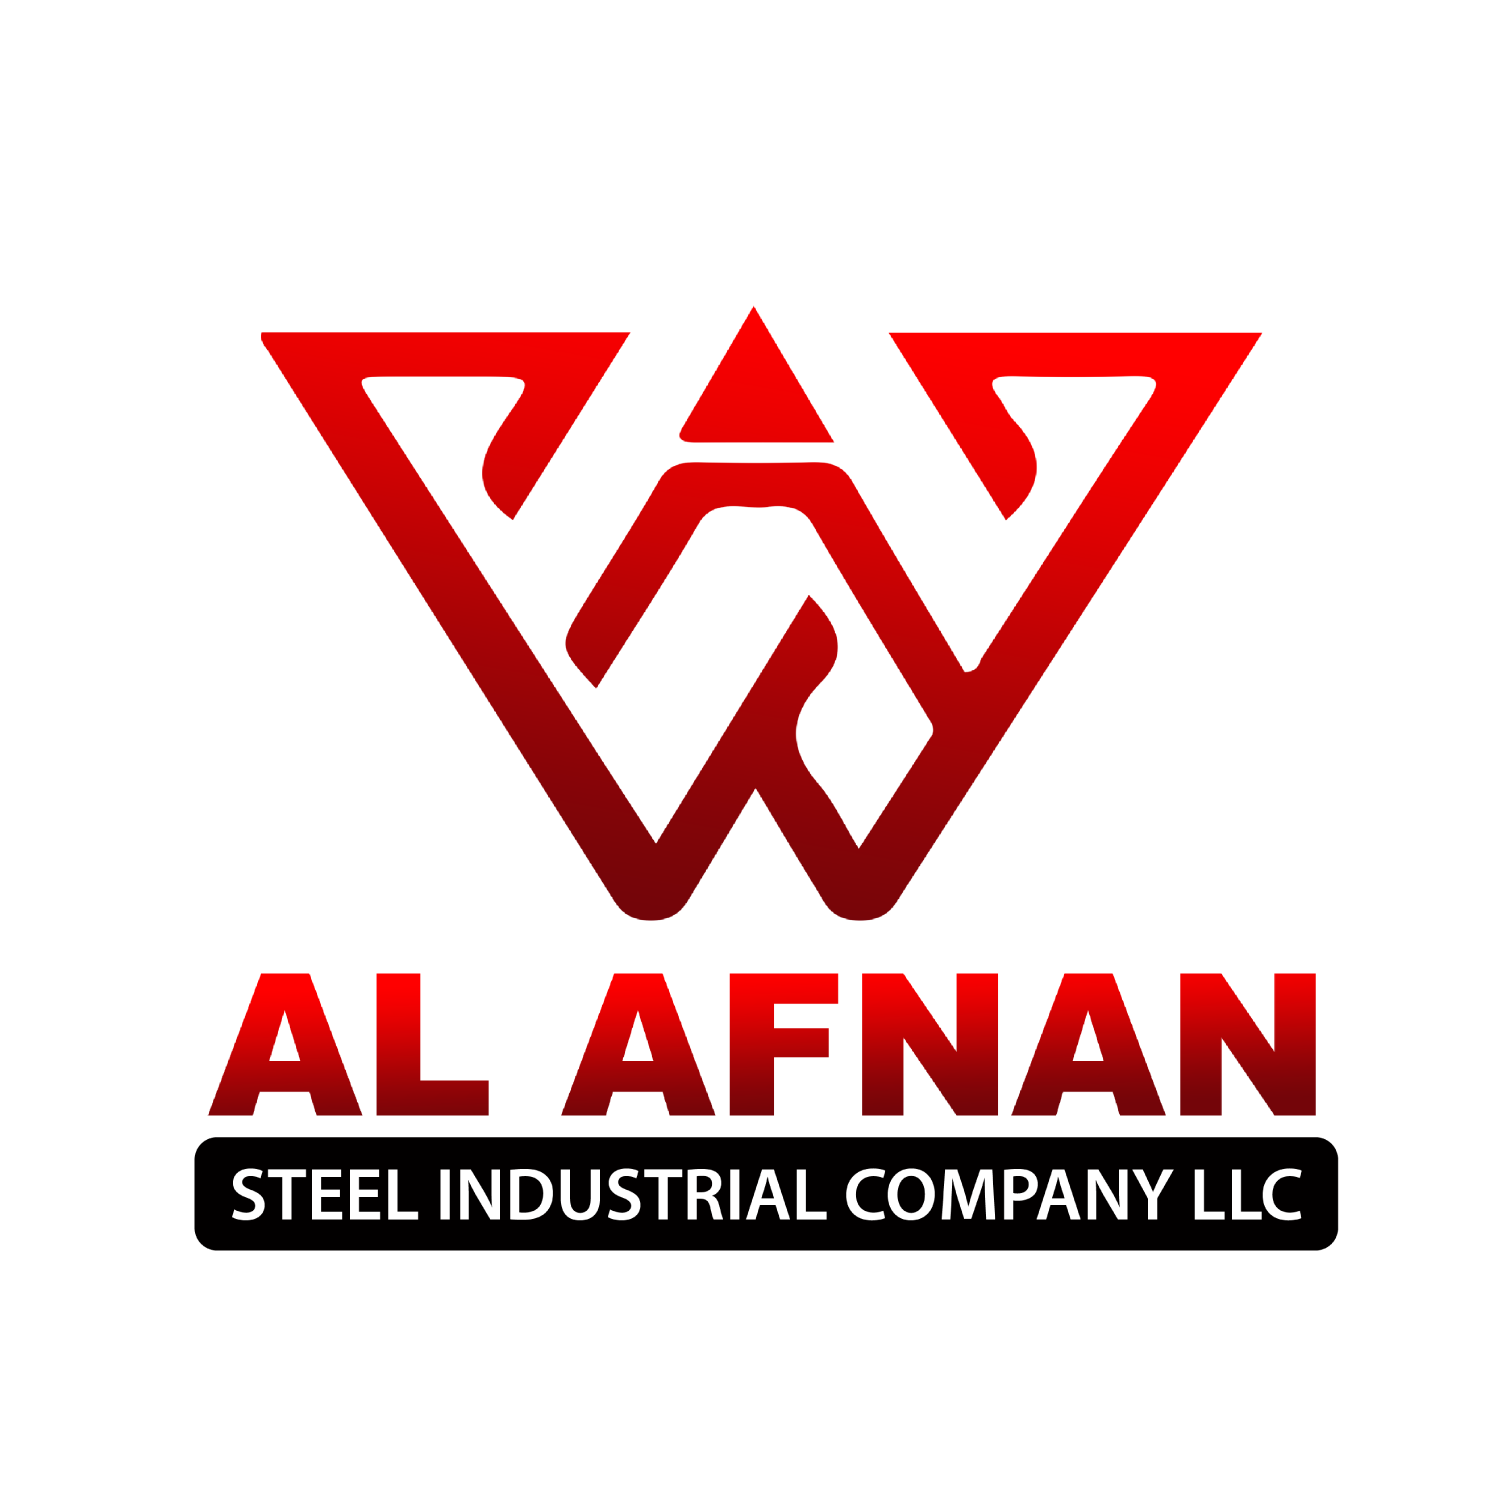 Al Afnan Steel Industrial Company LLC